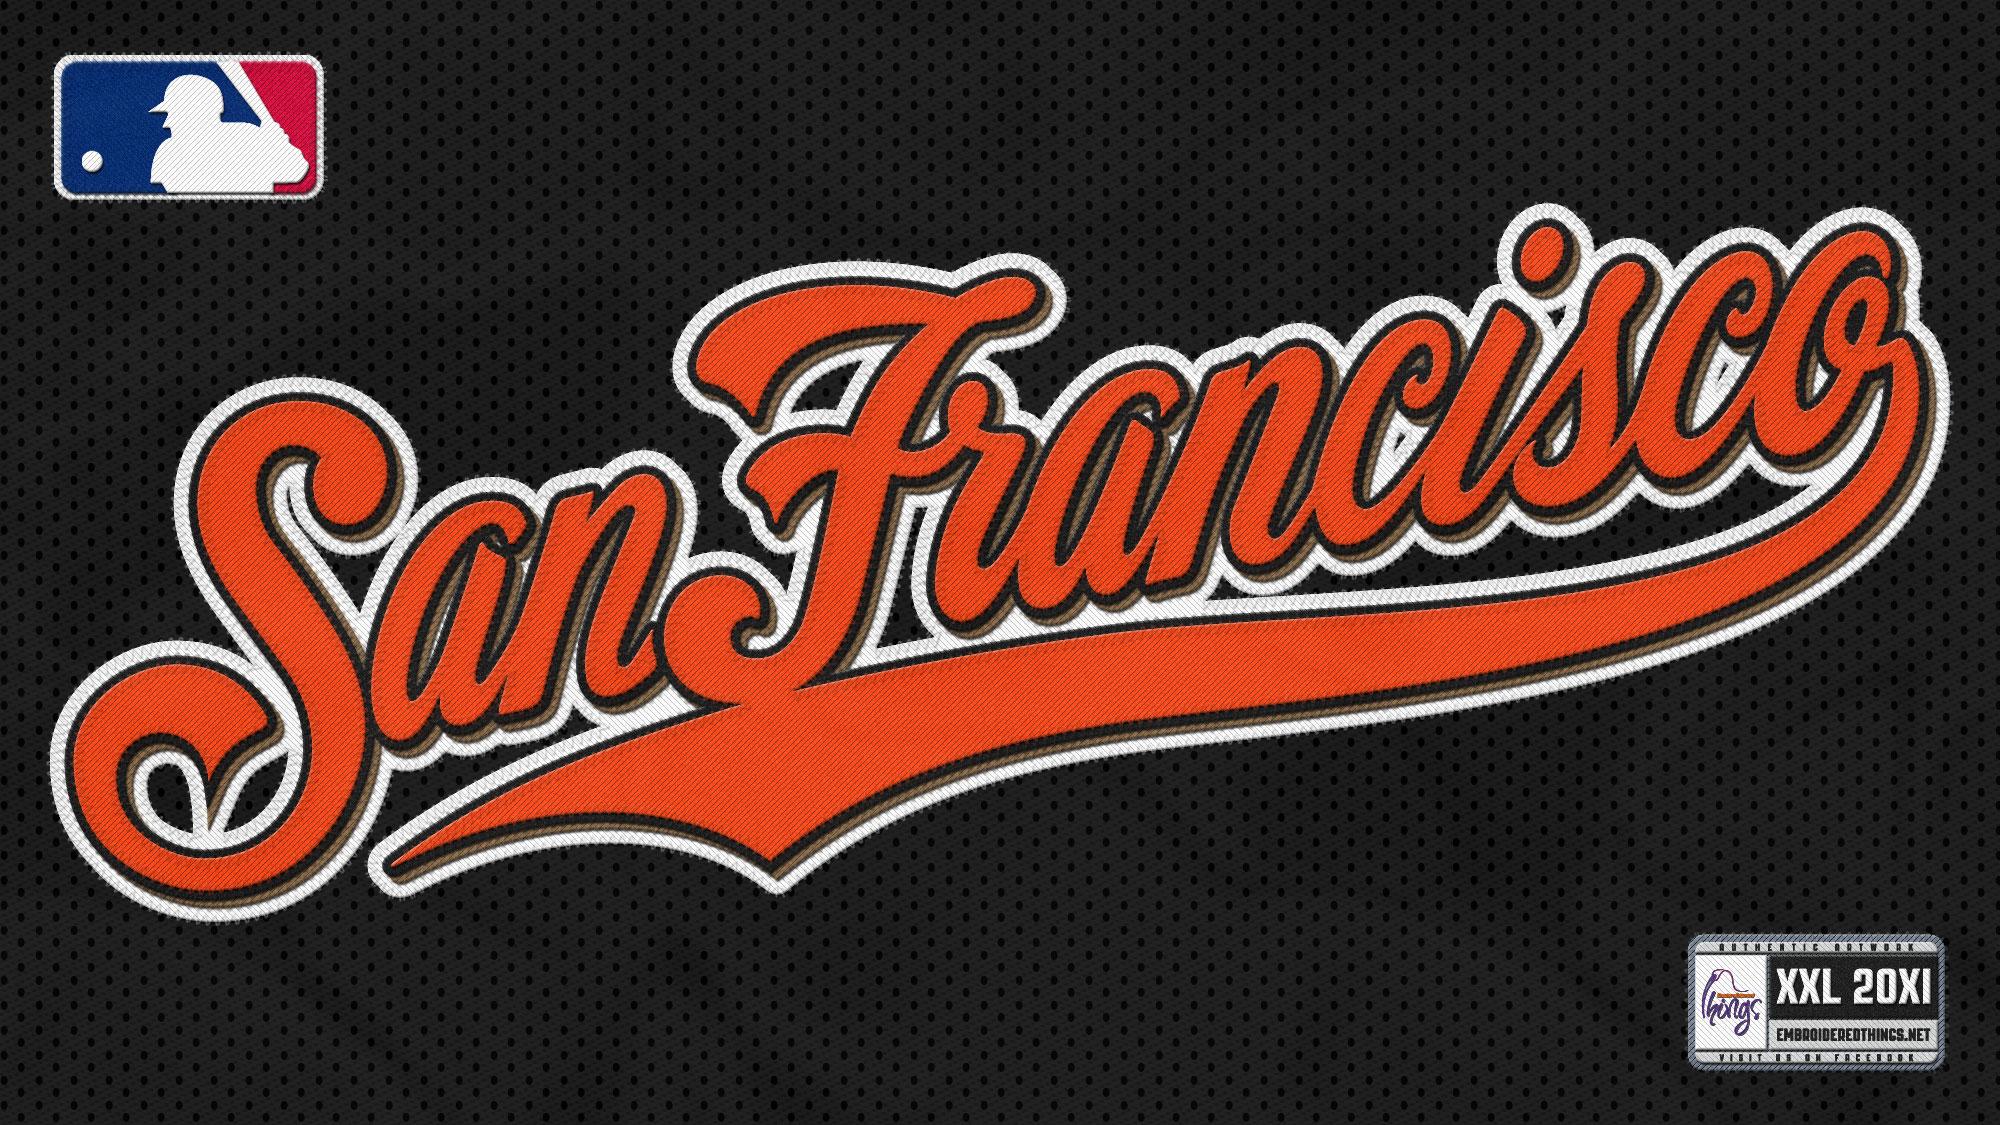 San Francisco Giants Mlb Baseball 2 Wallpapers Hd Desktop And Mobile Backgrounds